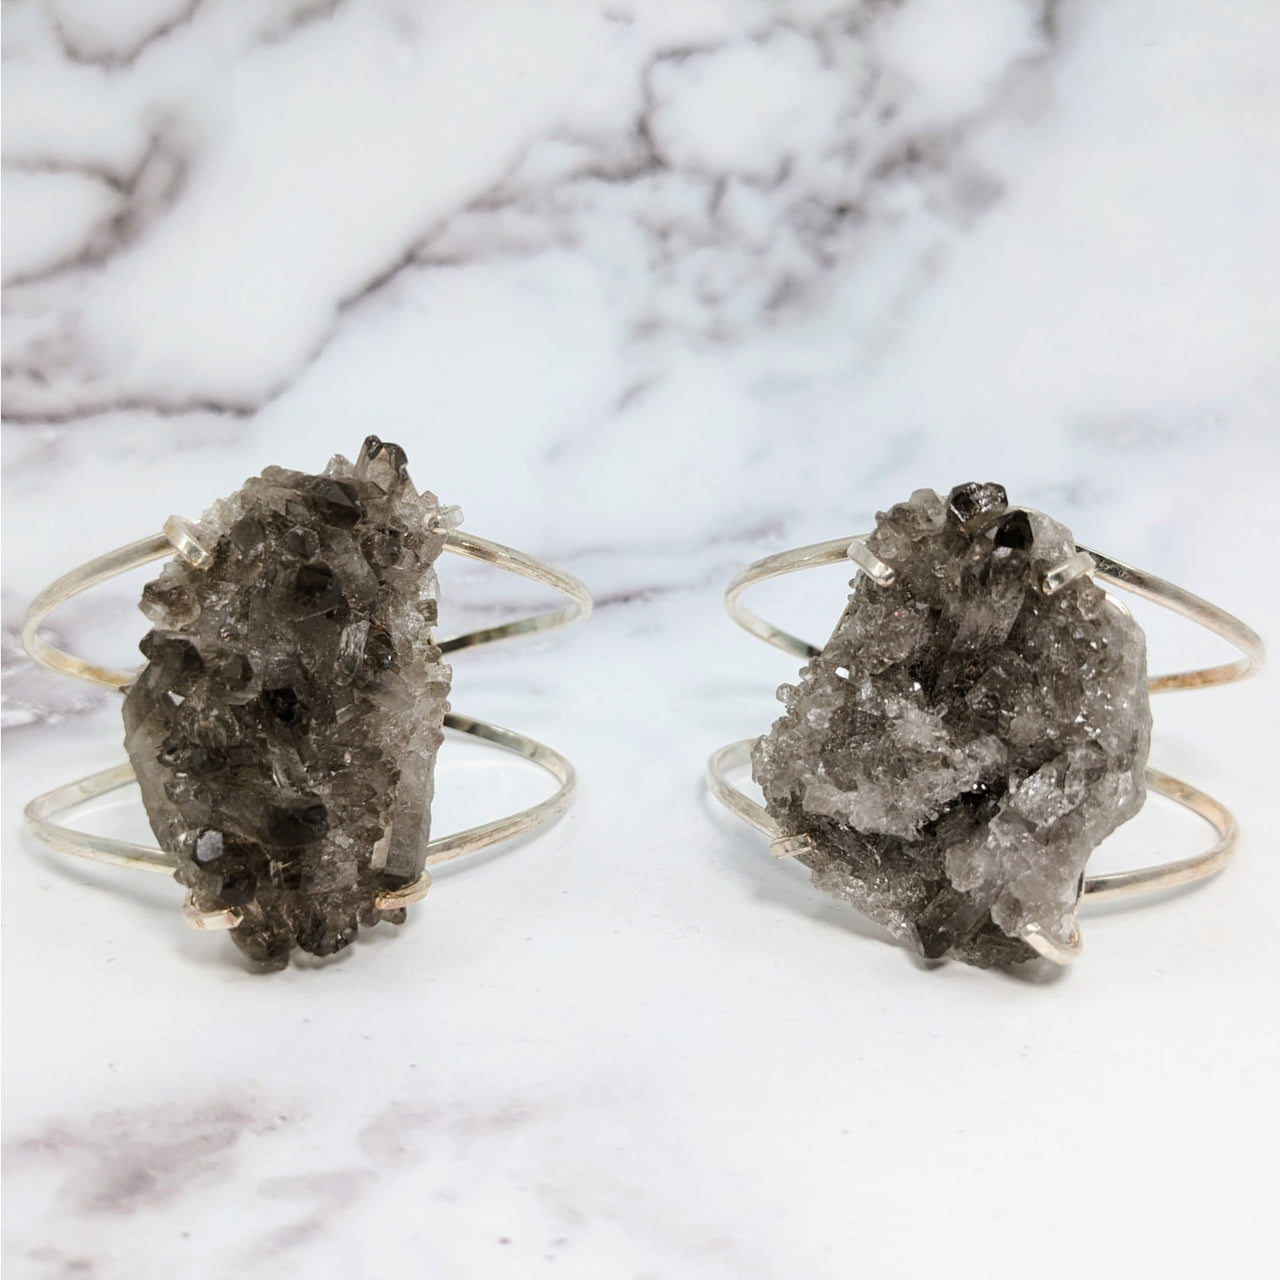 Silver rings with large smoky quartz rocks on Smoky Quartz Cluster Cuff Bracelet #LV3861